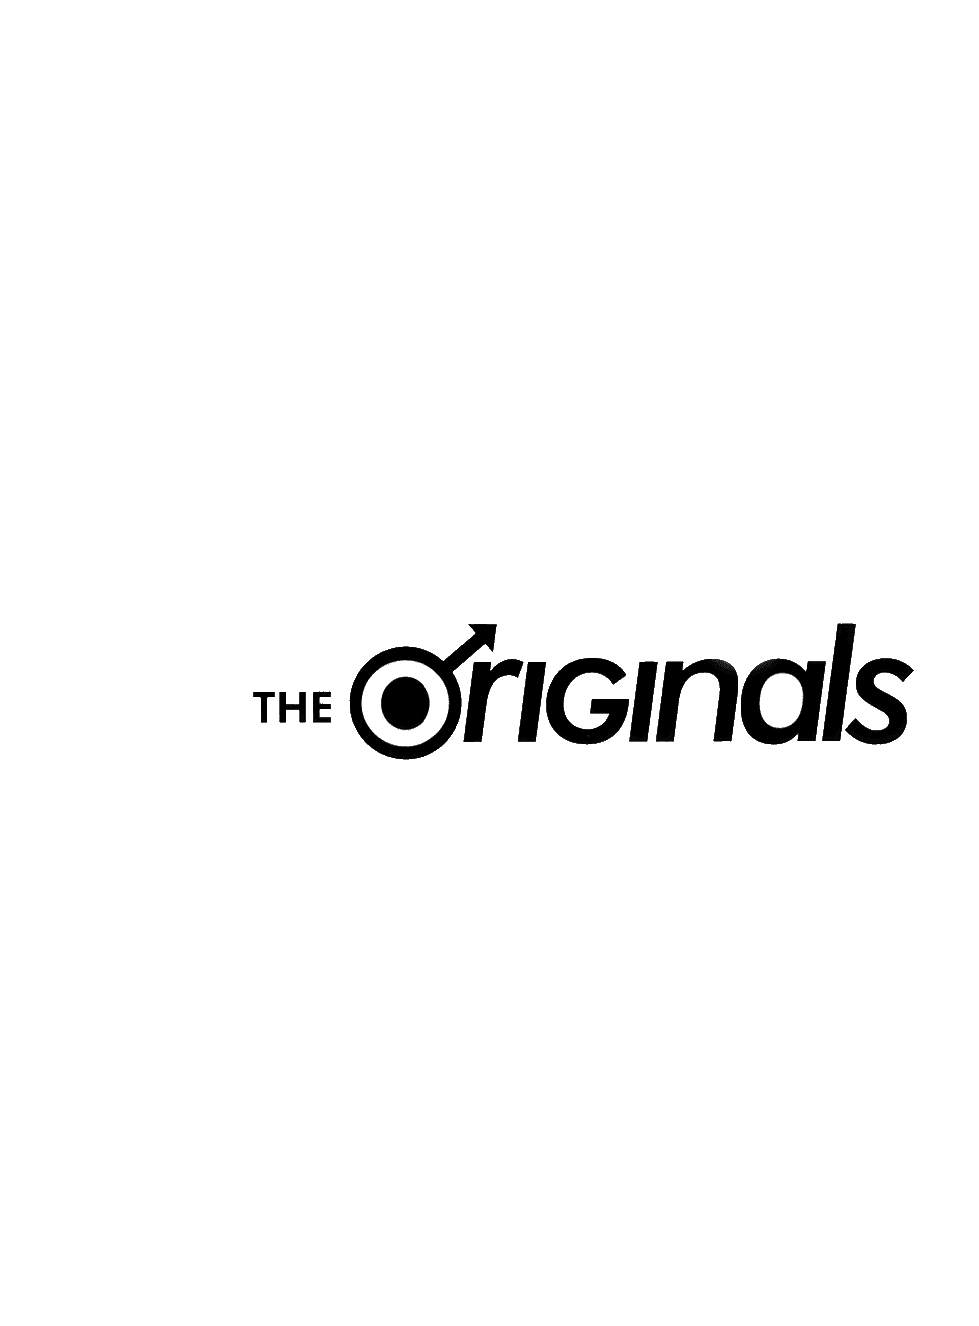 Read online The Originals comic -  Issue # TPB - 4